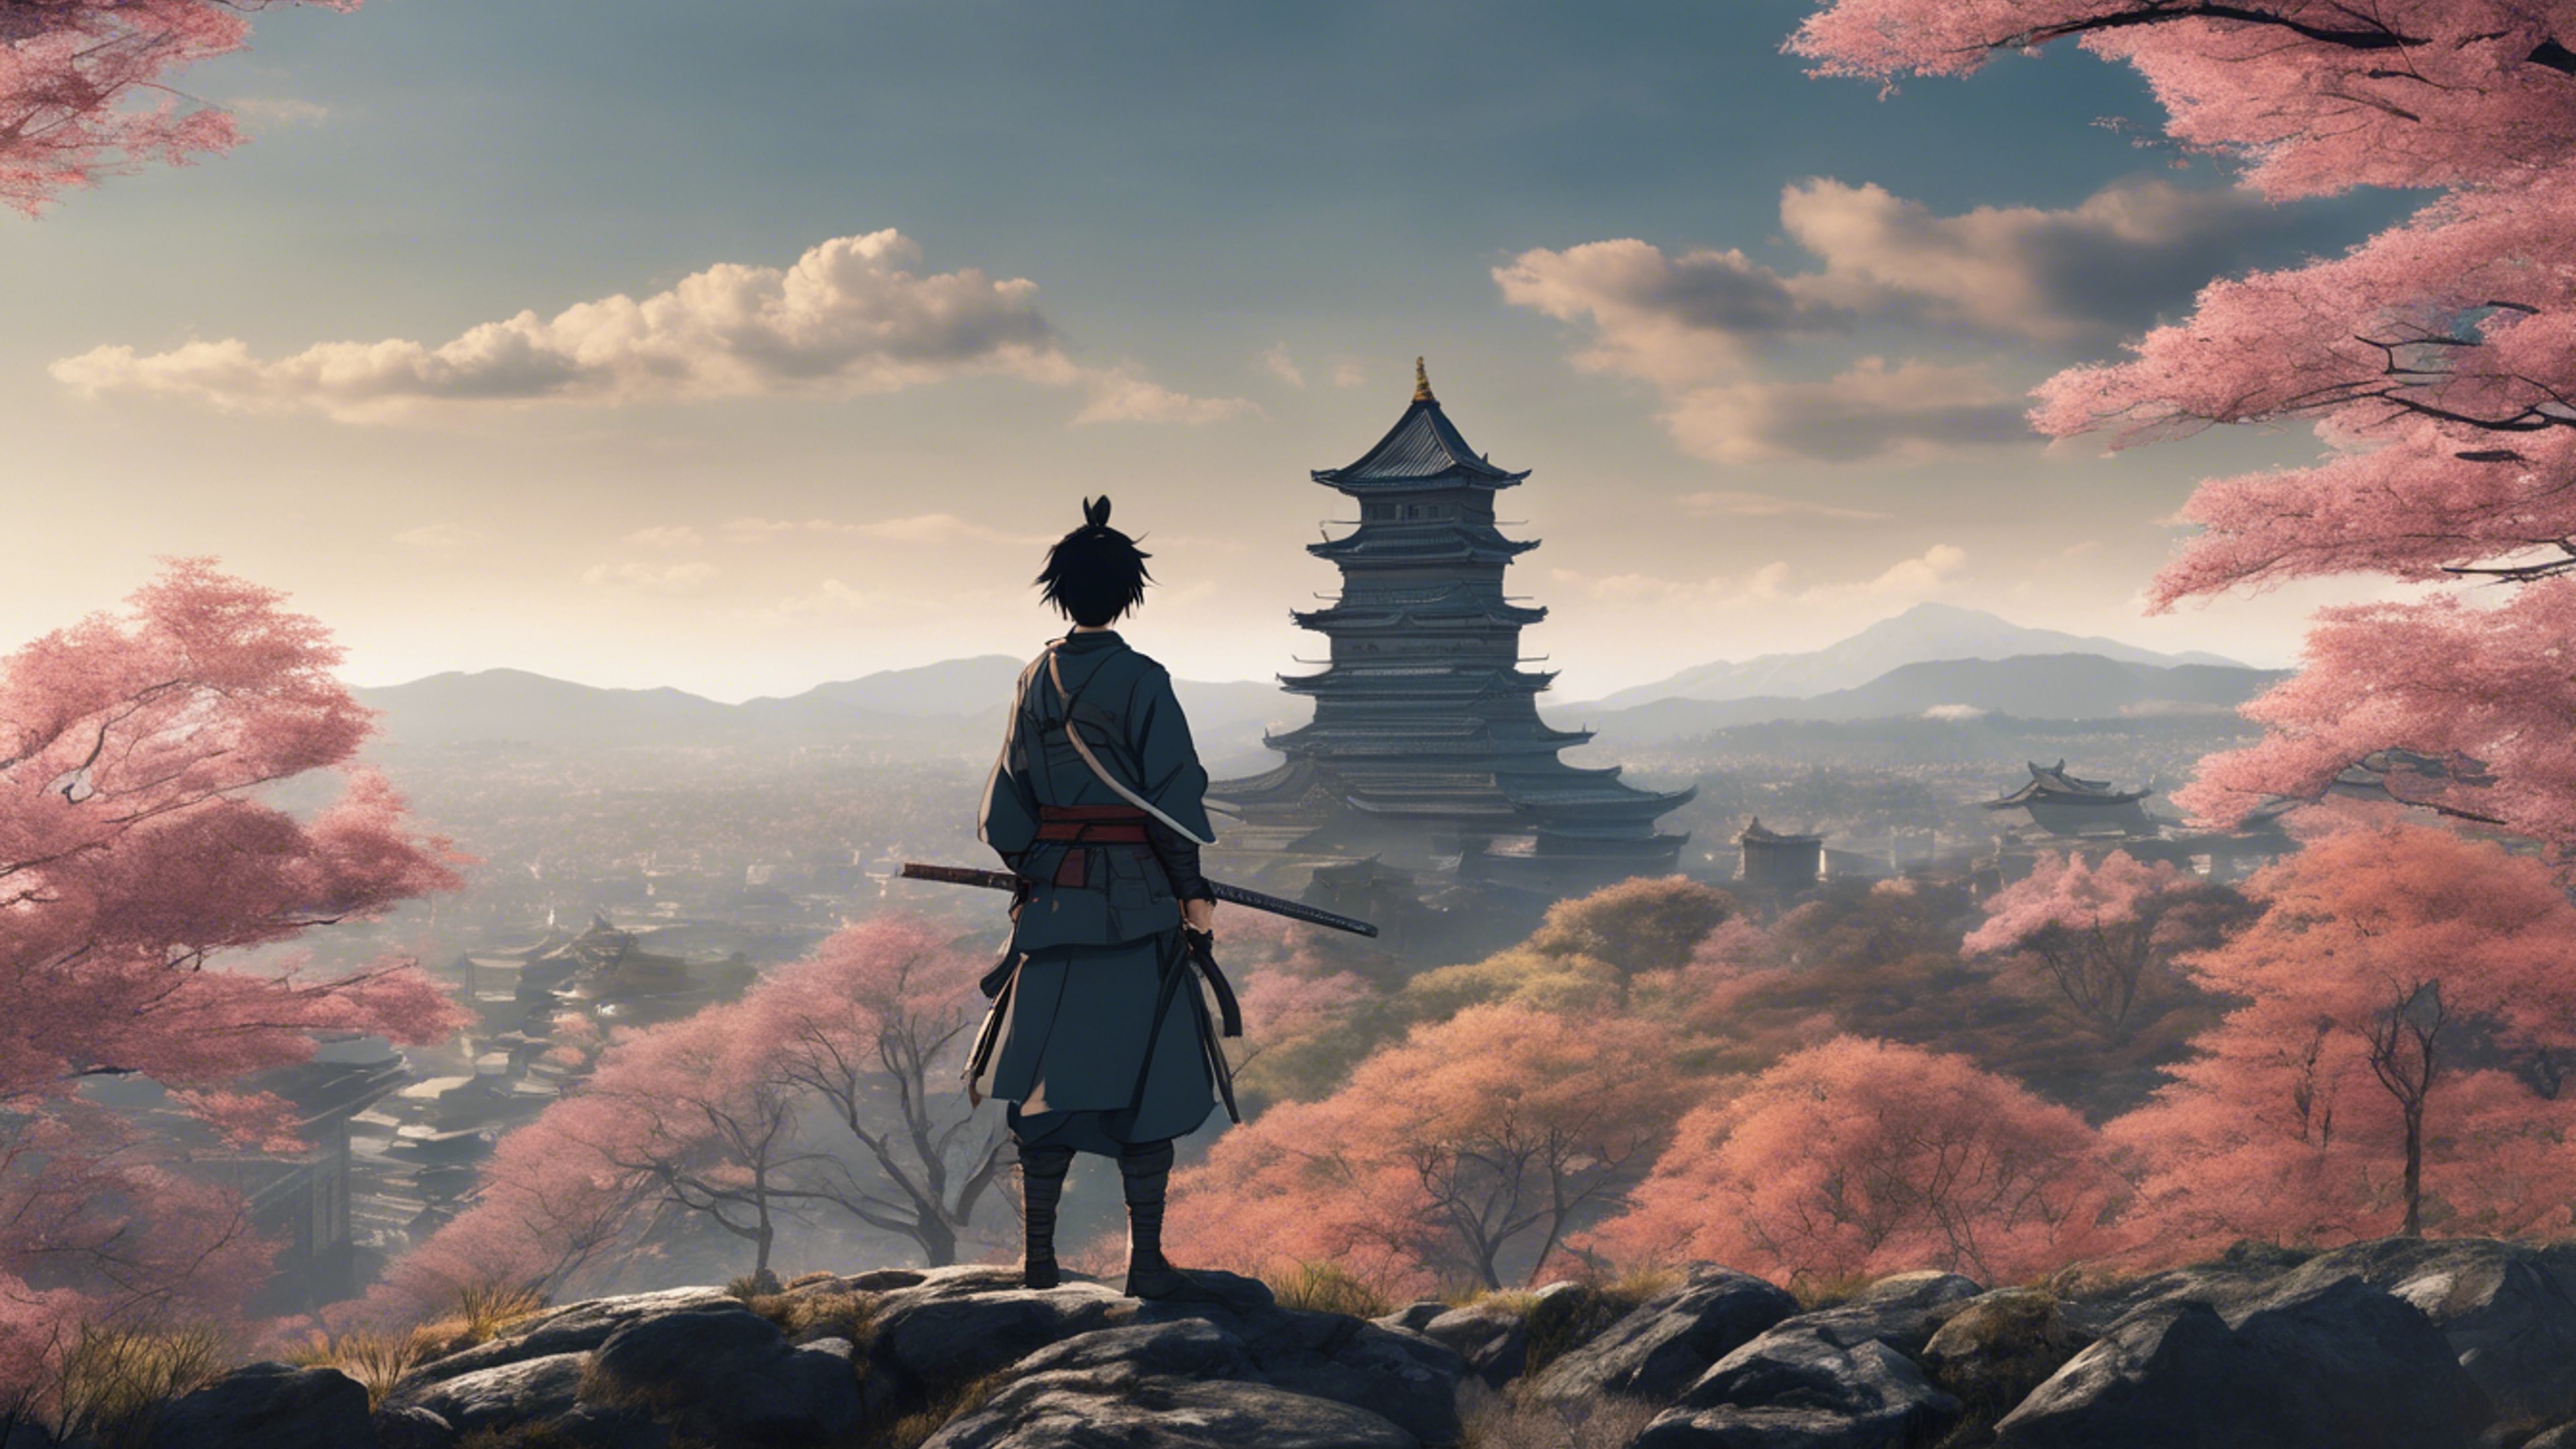 Anime samurai boy standing on a rocky hillside and looking towards a feudal-era Japanese castle. Tapeta[9402636a9a6e4b8c90bb]